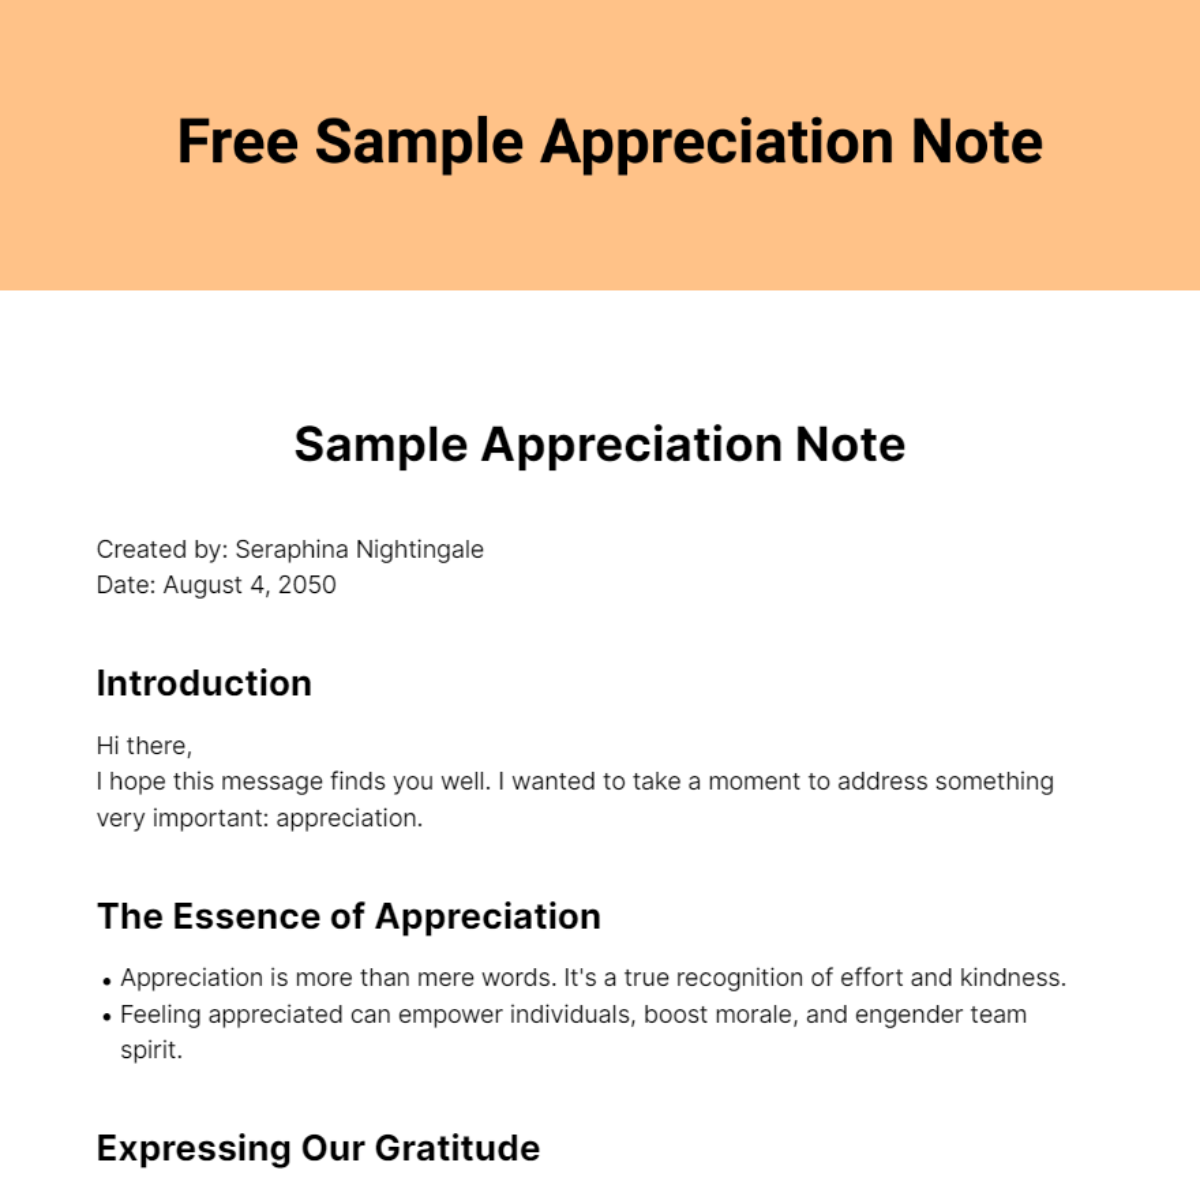 Free Sample Appreciation Note Template